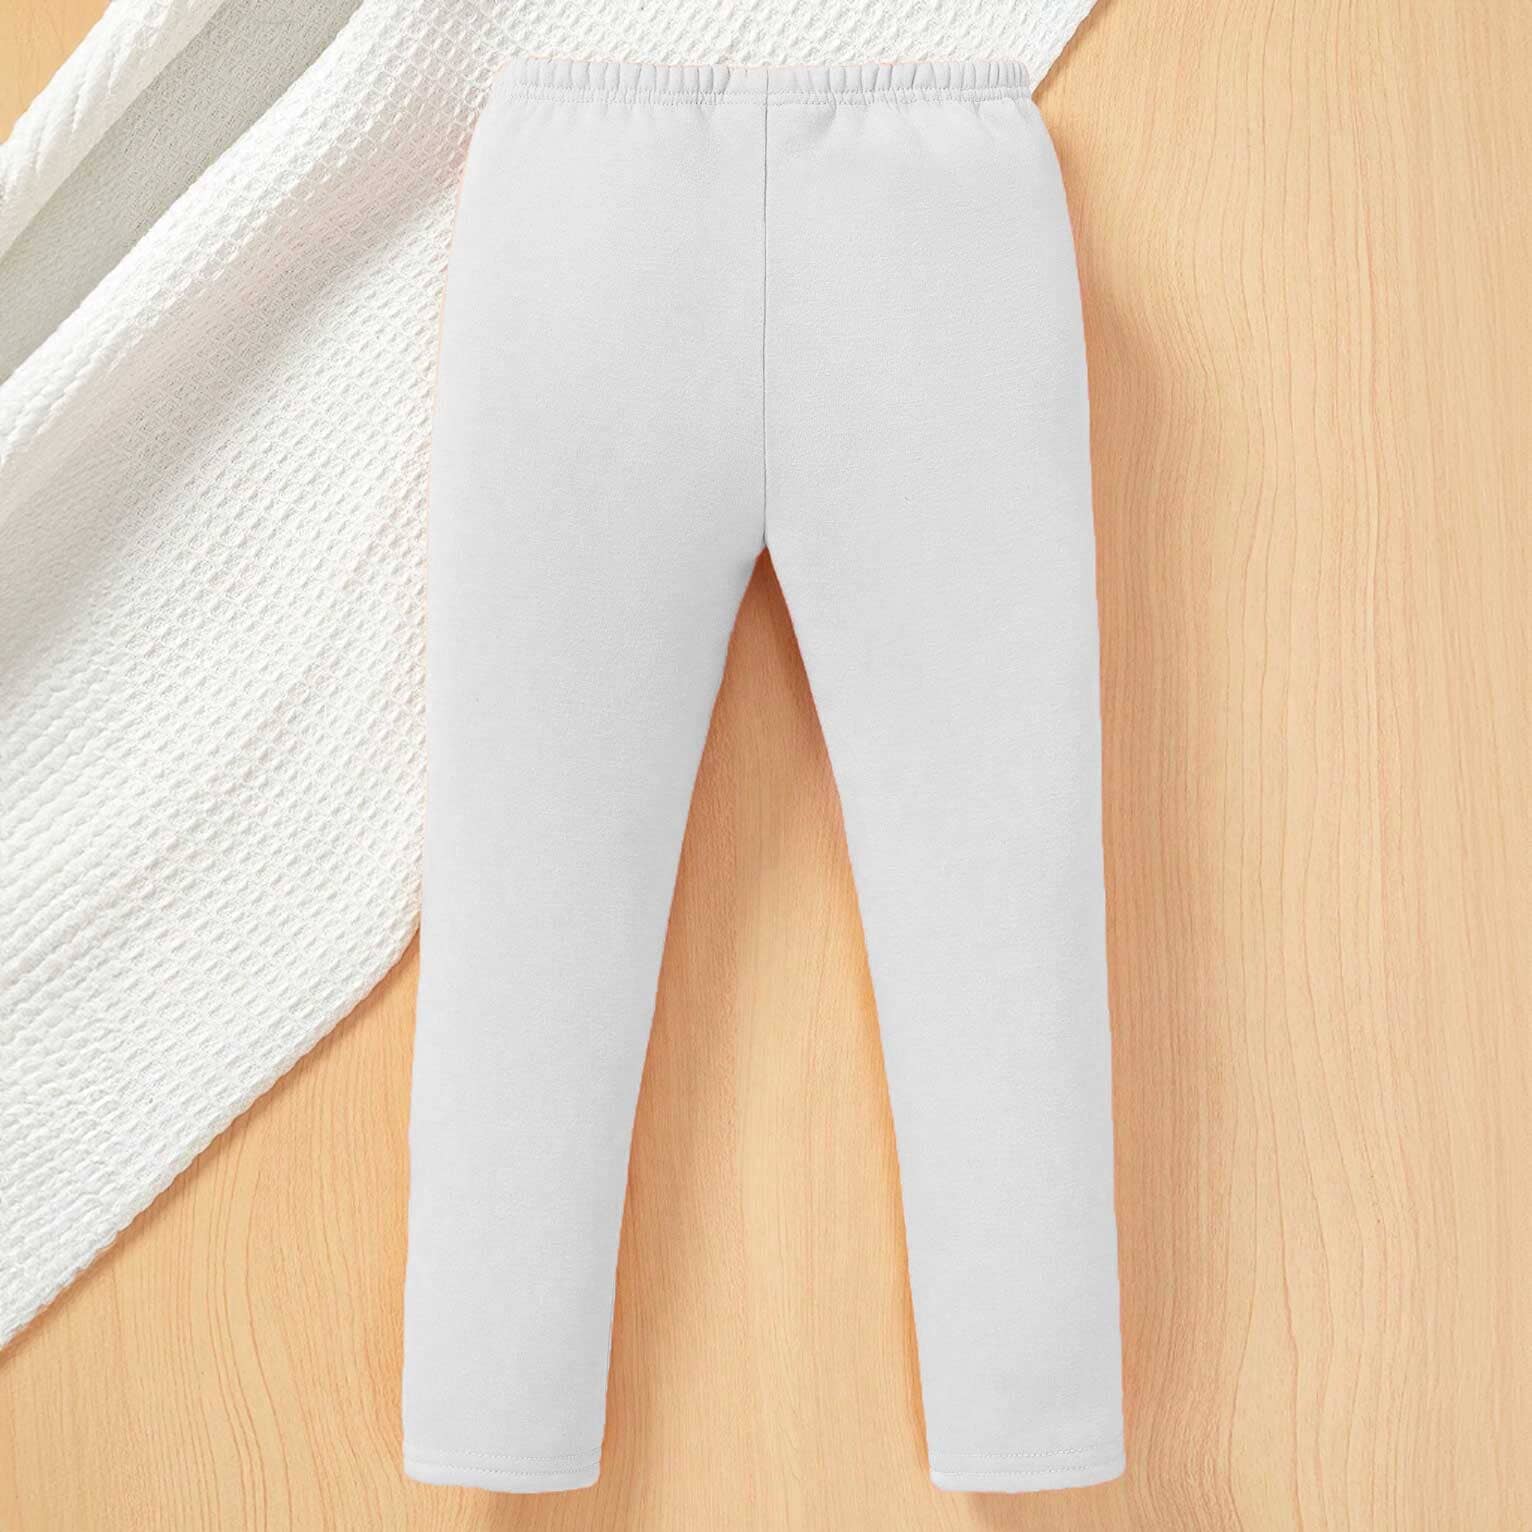 Bunbury Kid's Thermal Base Layer Trousers Boy's Trousers RAM White 18 (1-2 Years) 